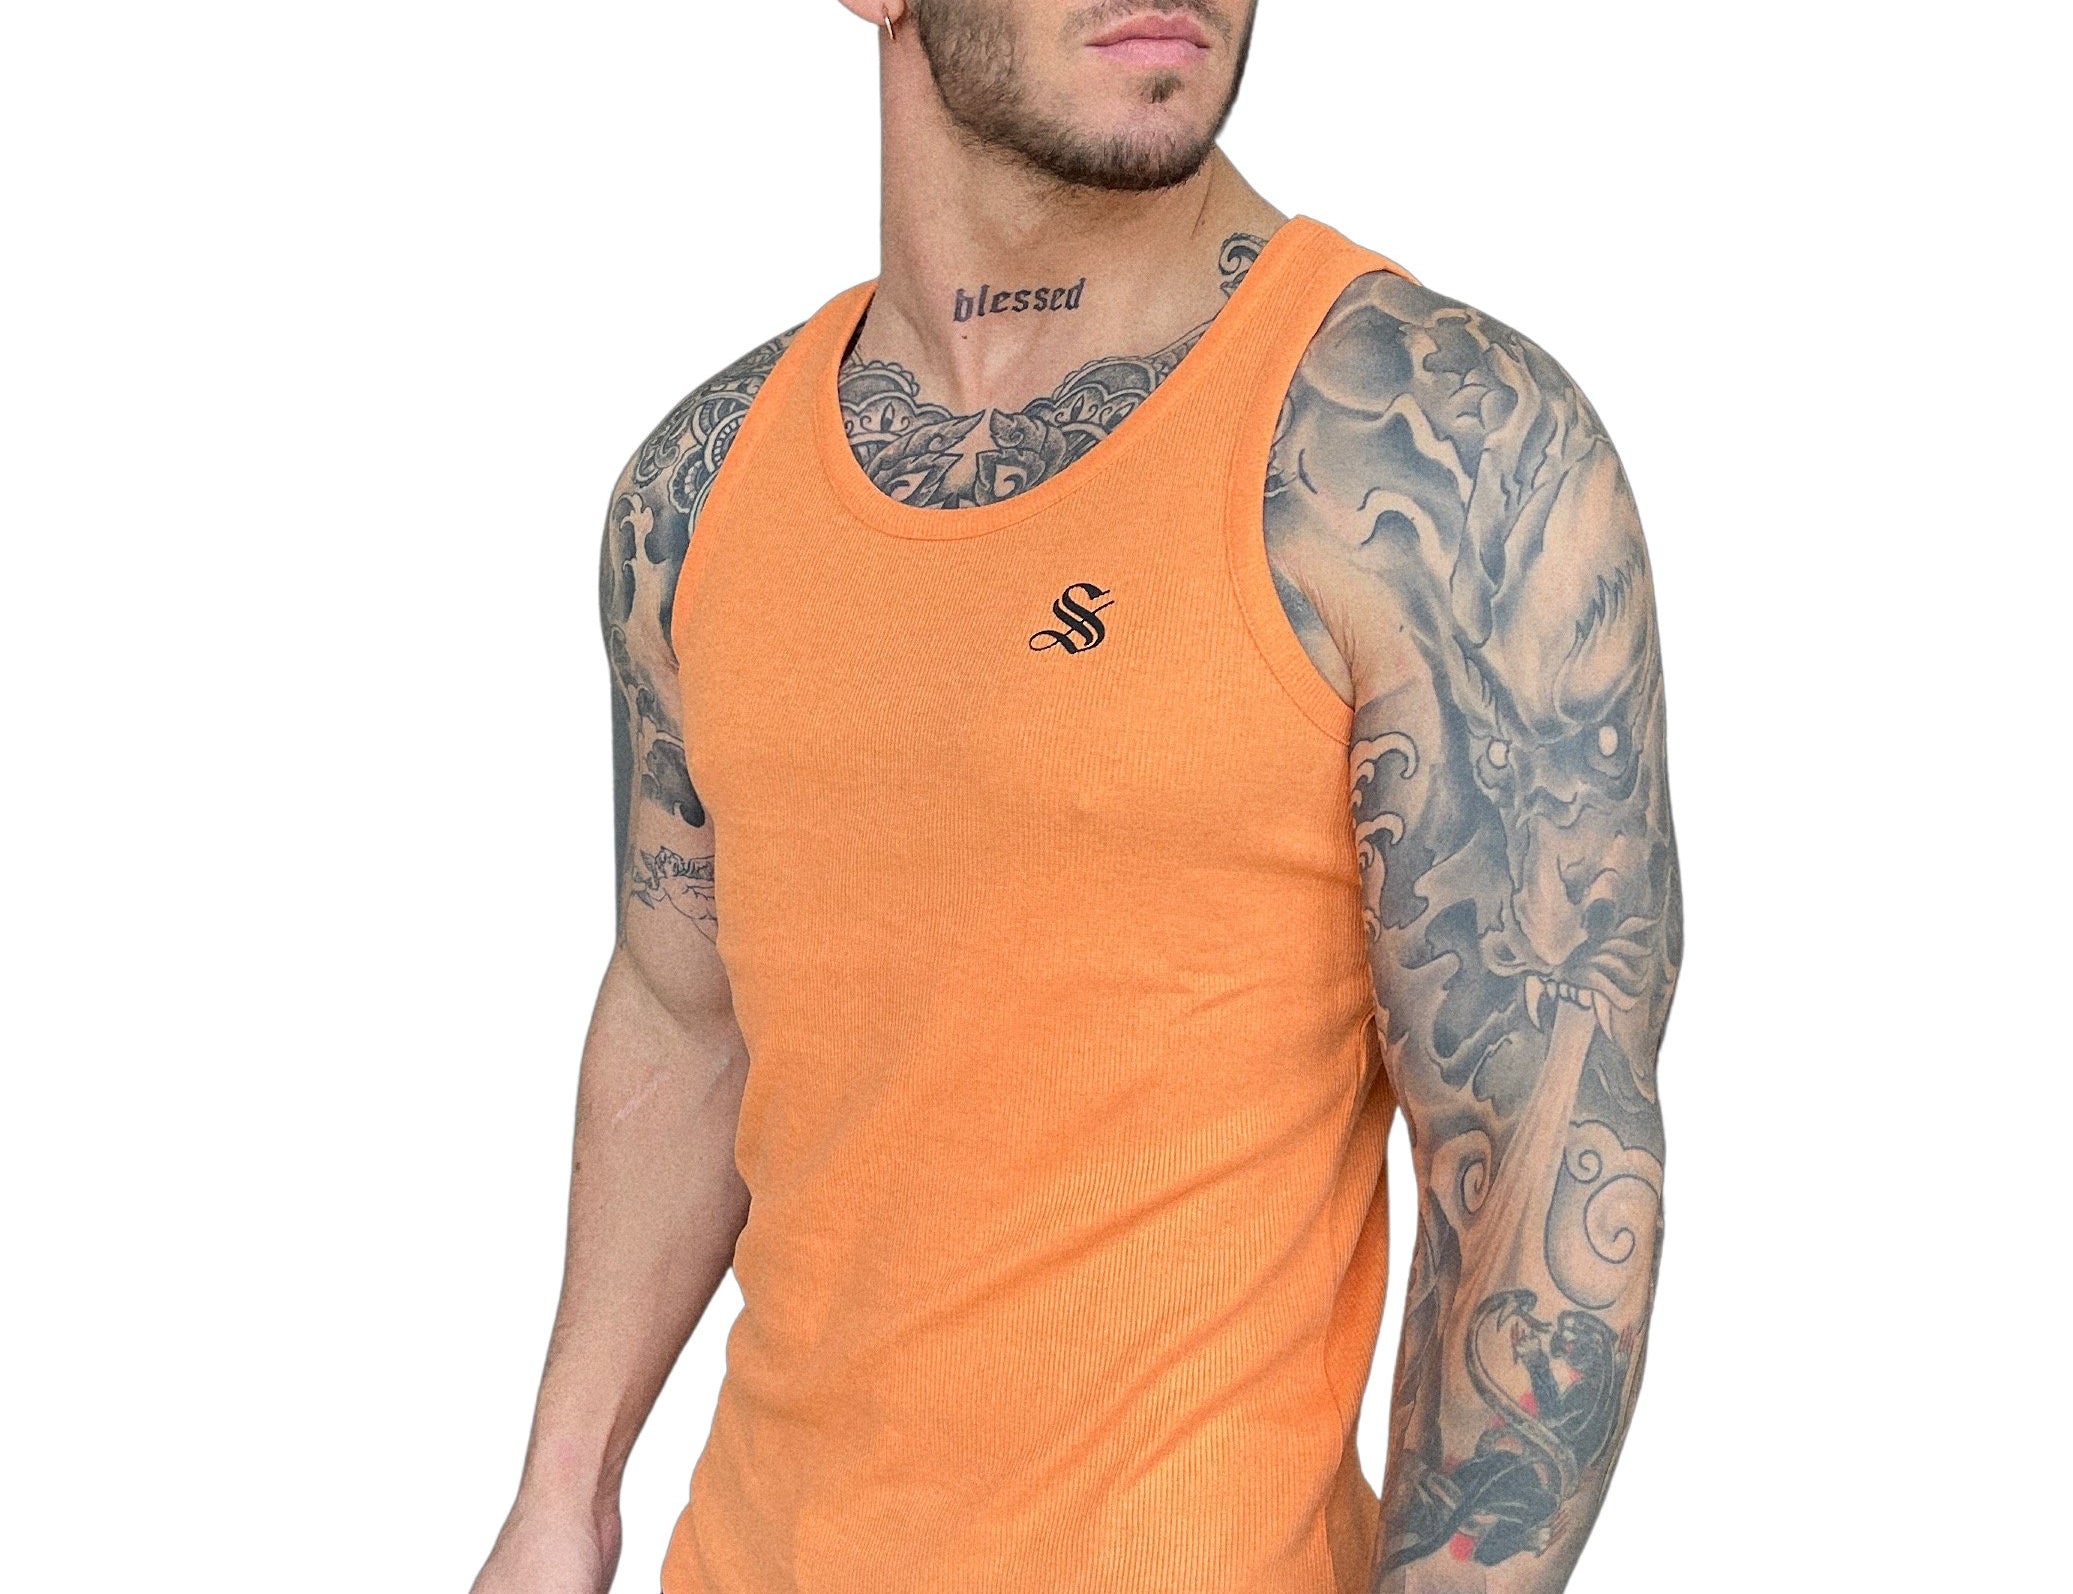 Almanio - Orange Tank Top for Men - Sarman Fashion - Wholesale Clothing Fashion Brand for Men from Canada